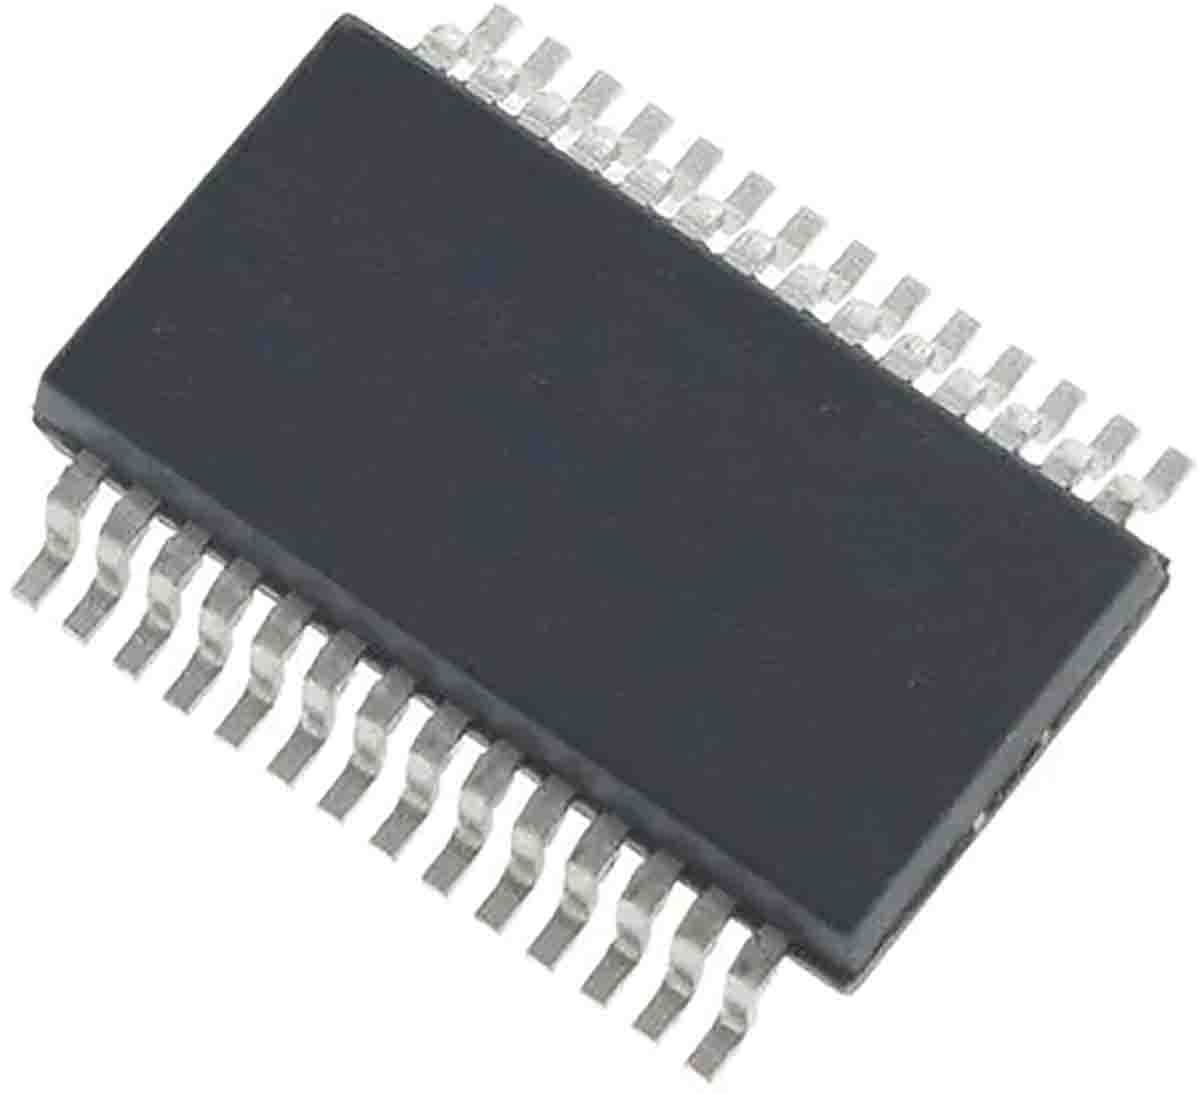 ams OSRAM AS1130-BSST TDFN Display Driver, 8 Segment, 8 Pin, 2.7 → 5.5 V